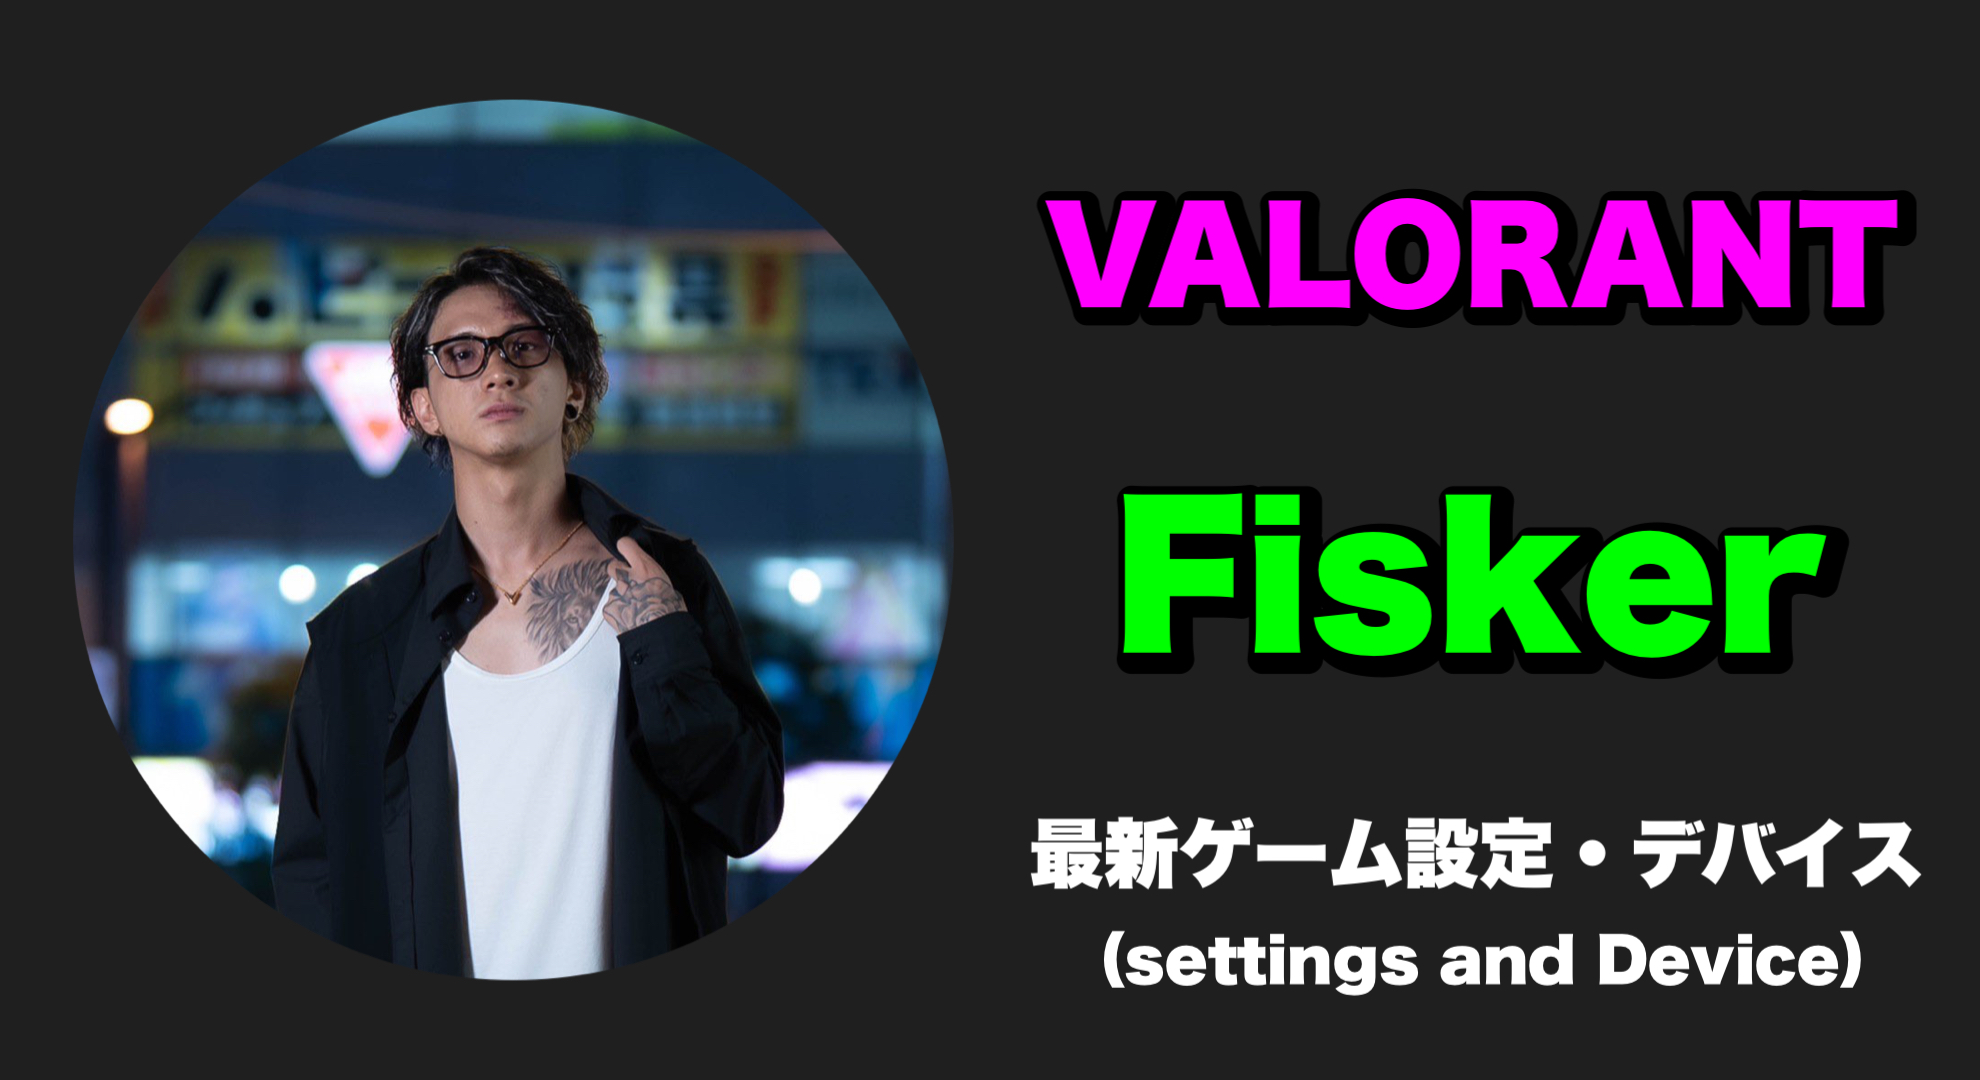 【VALORANT】Fisker(フィスカー) 感度、キー配置、クロスヘア、設定、デバイス Fisker sens Fisker settings Fisker crosshair Fisker device